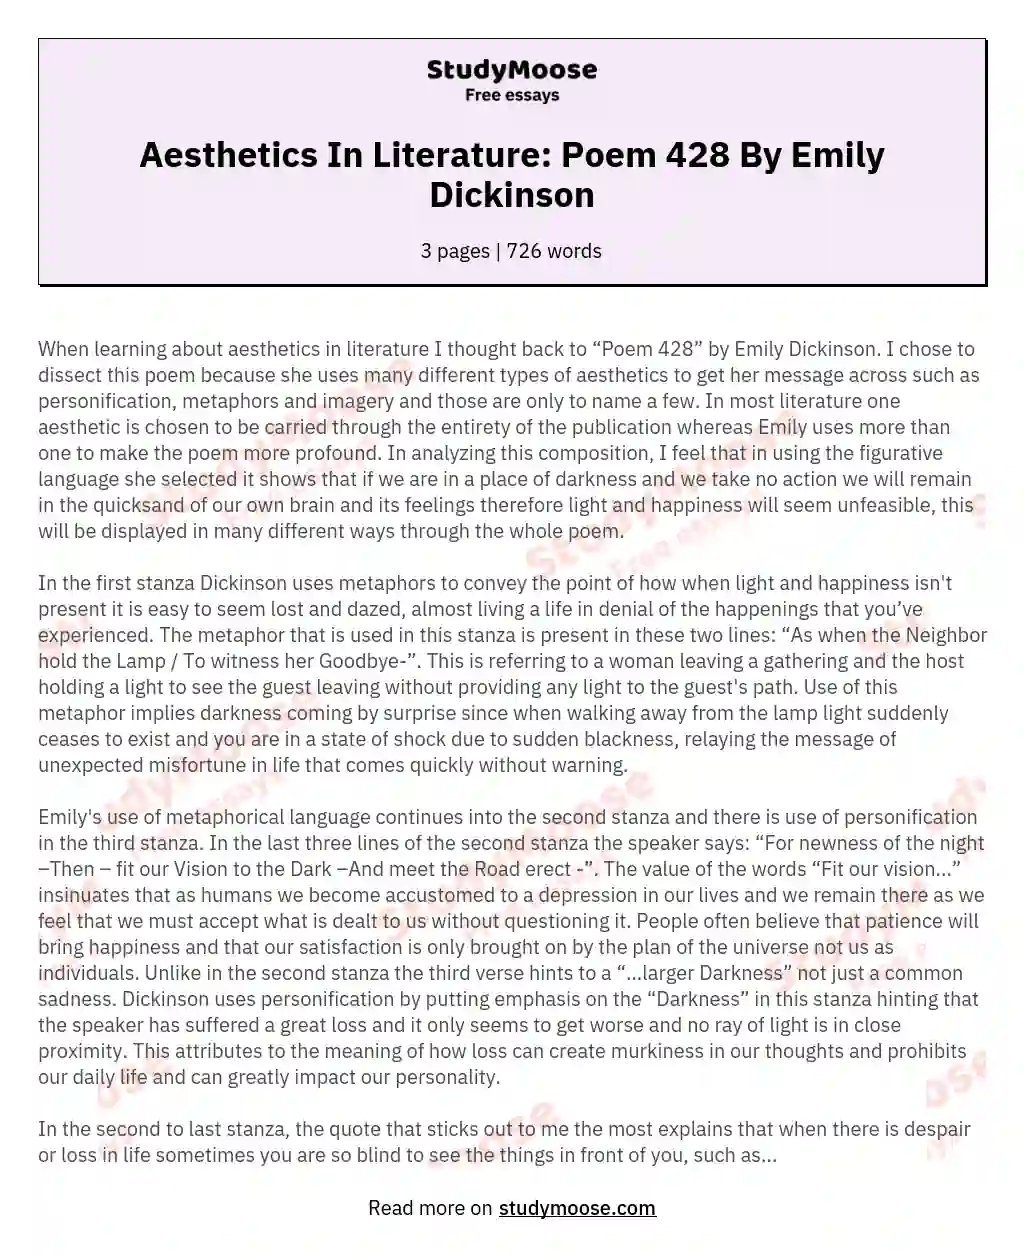 Aesthetics In Literature: Poem 428 By Emily Dickinson essay